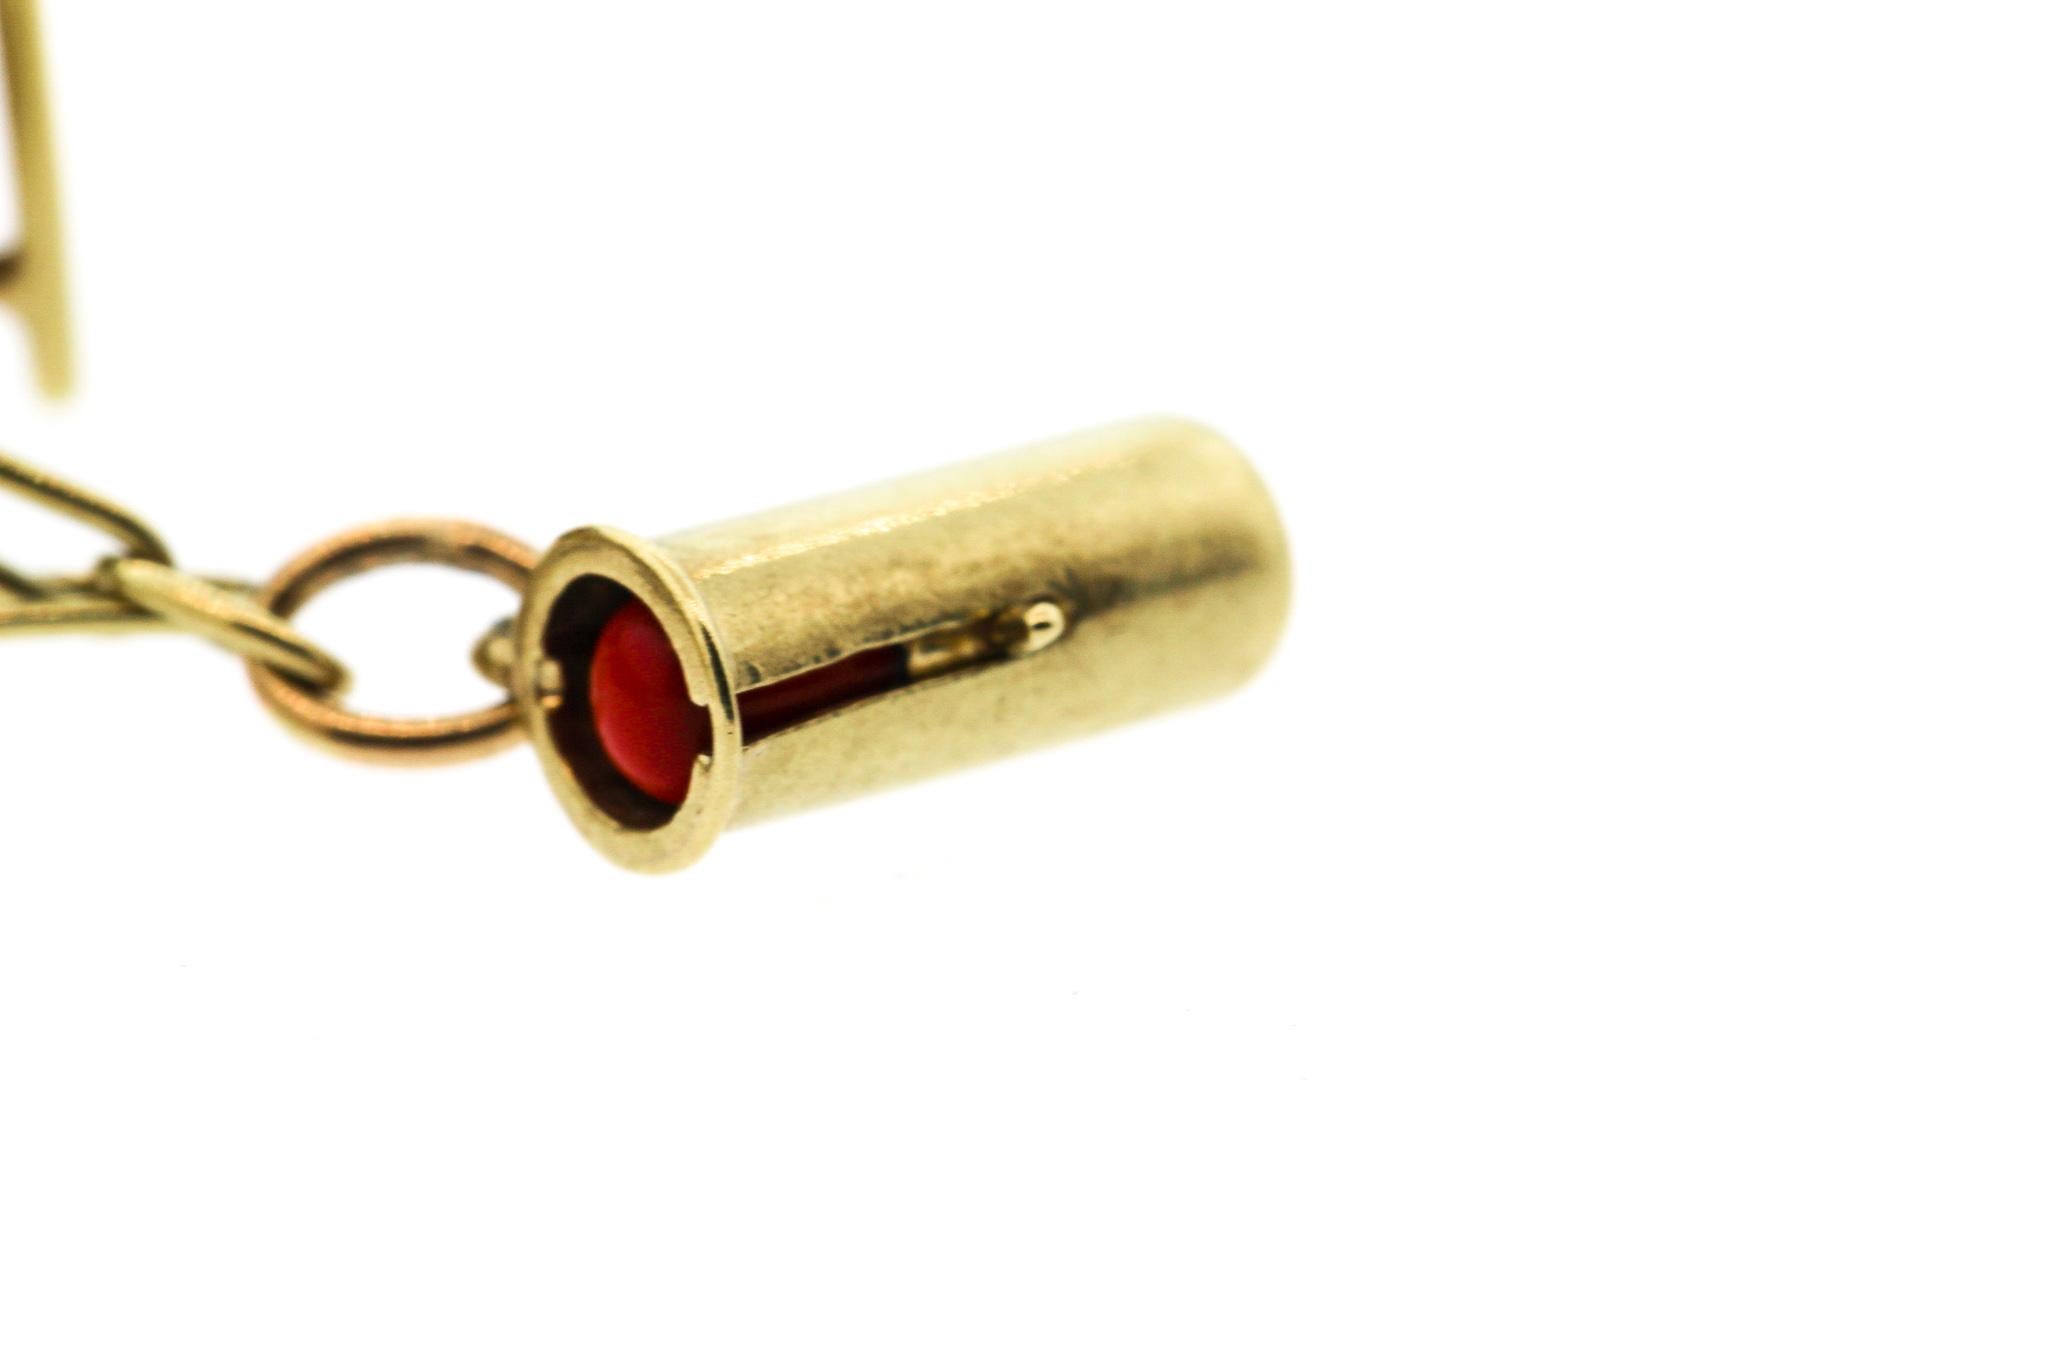  Retro 14 Karat Yellow Gold Charm Bracelet with Moving Charms 4